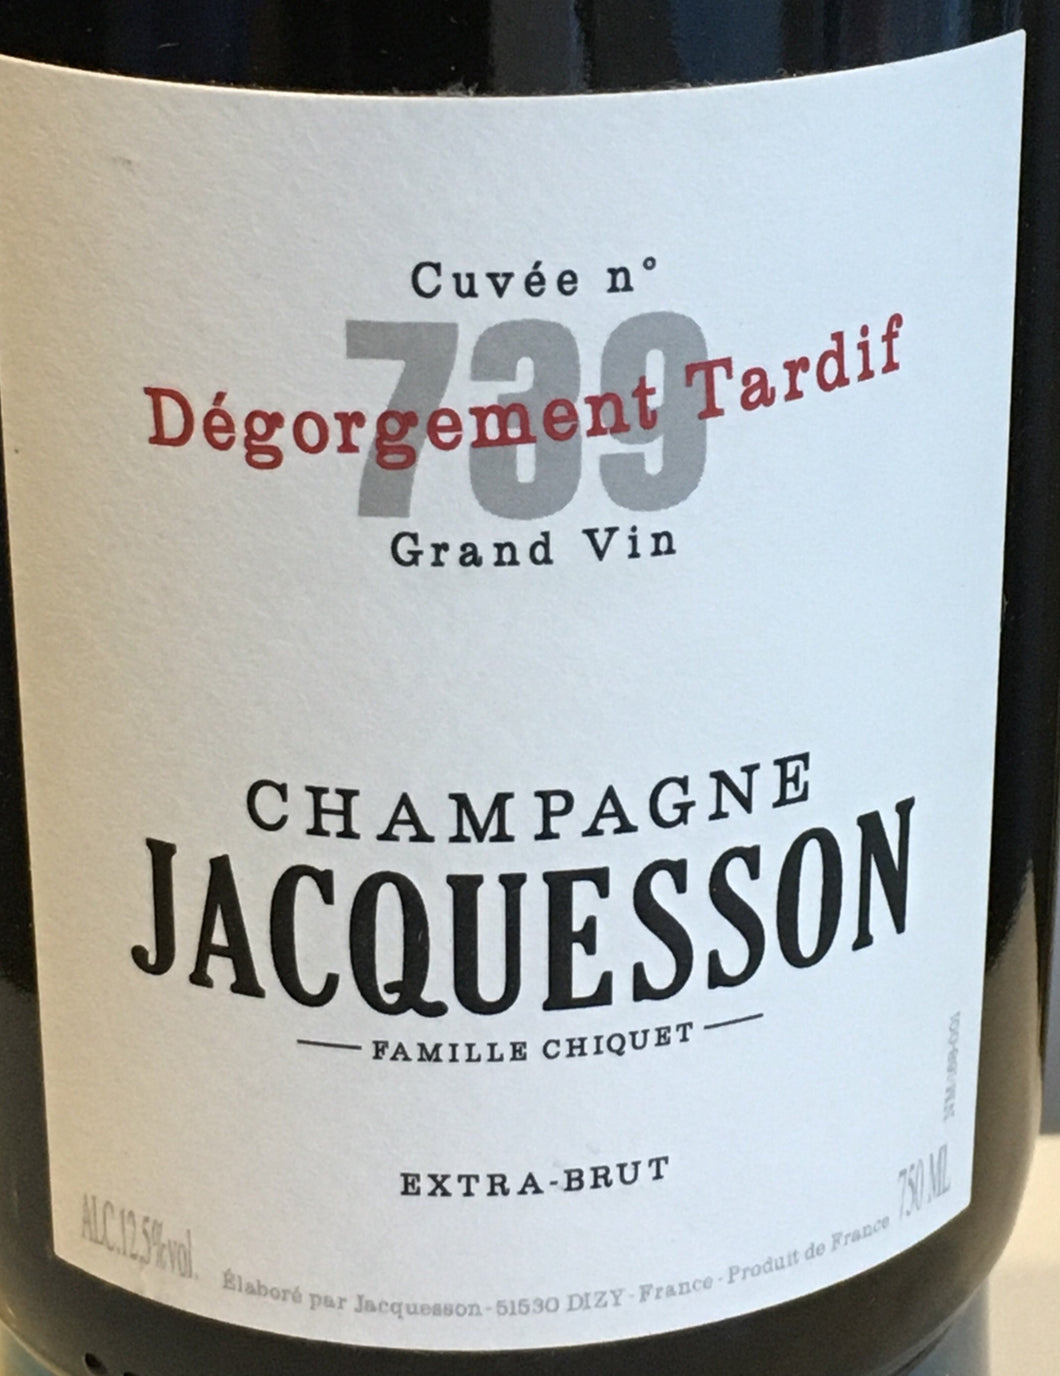 Champagne Jacquesson 'Degorgement Tardif' - Cuvee 739